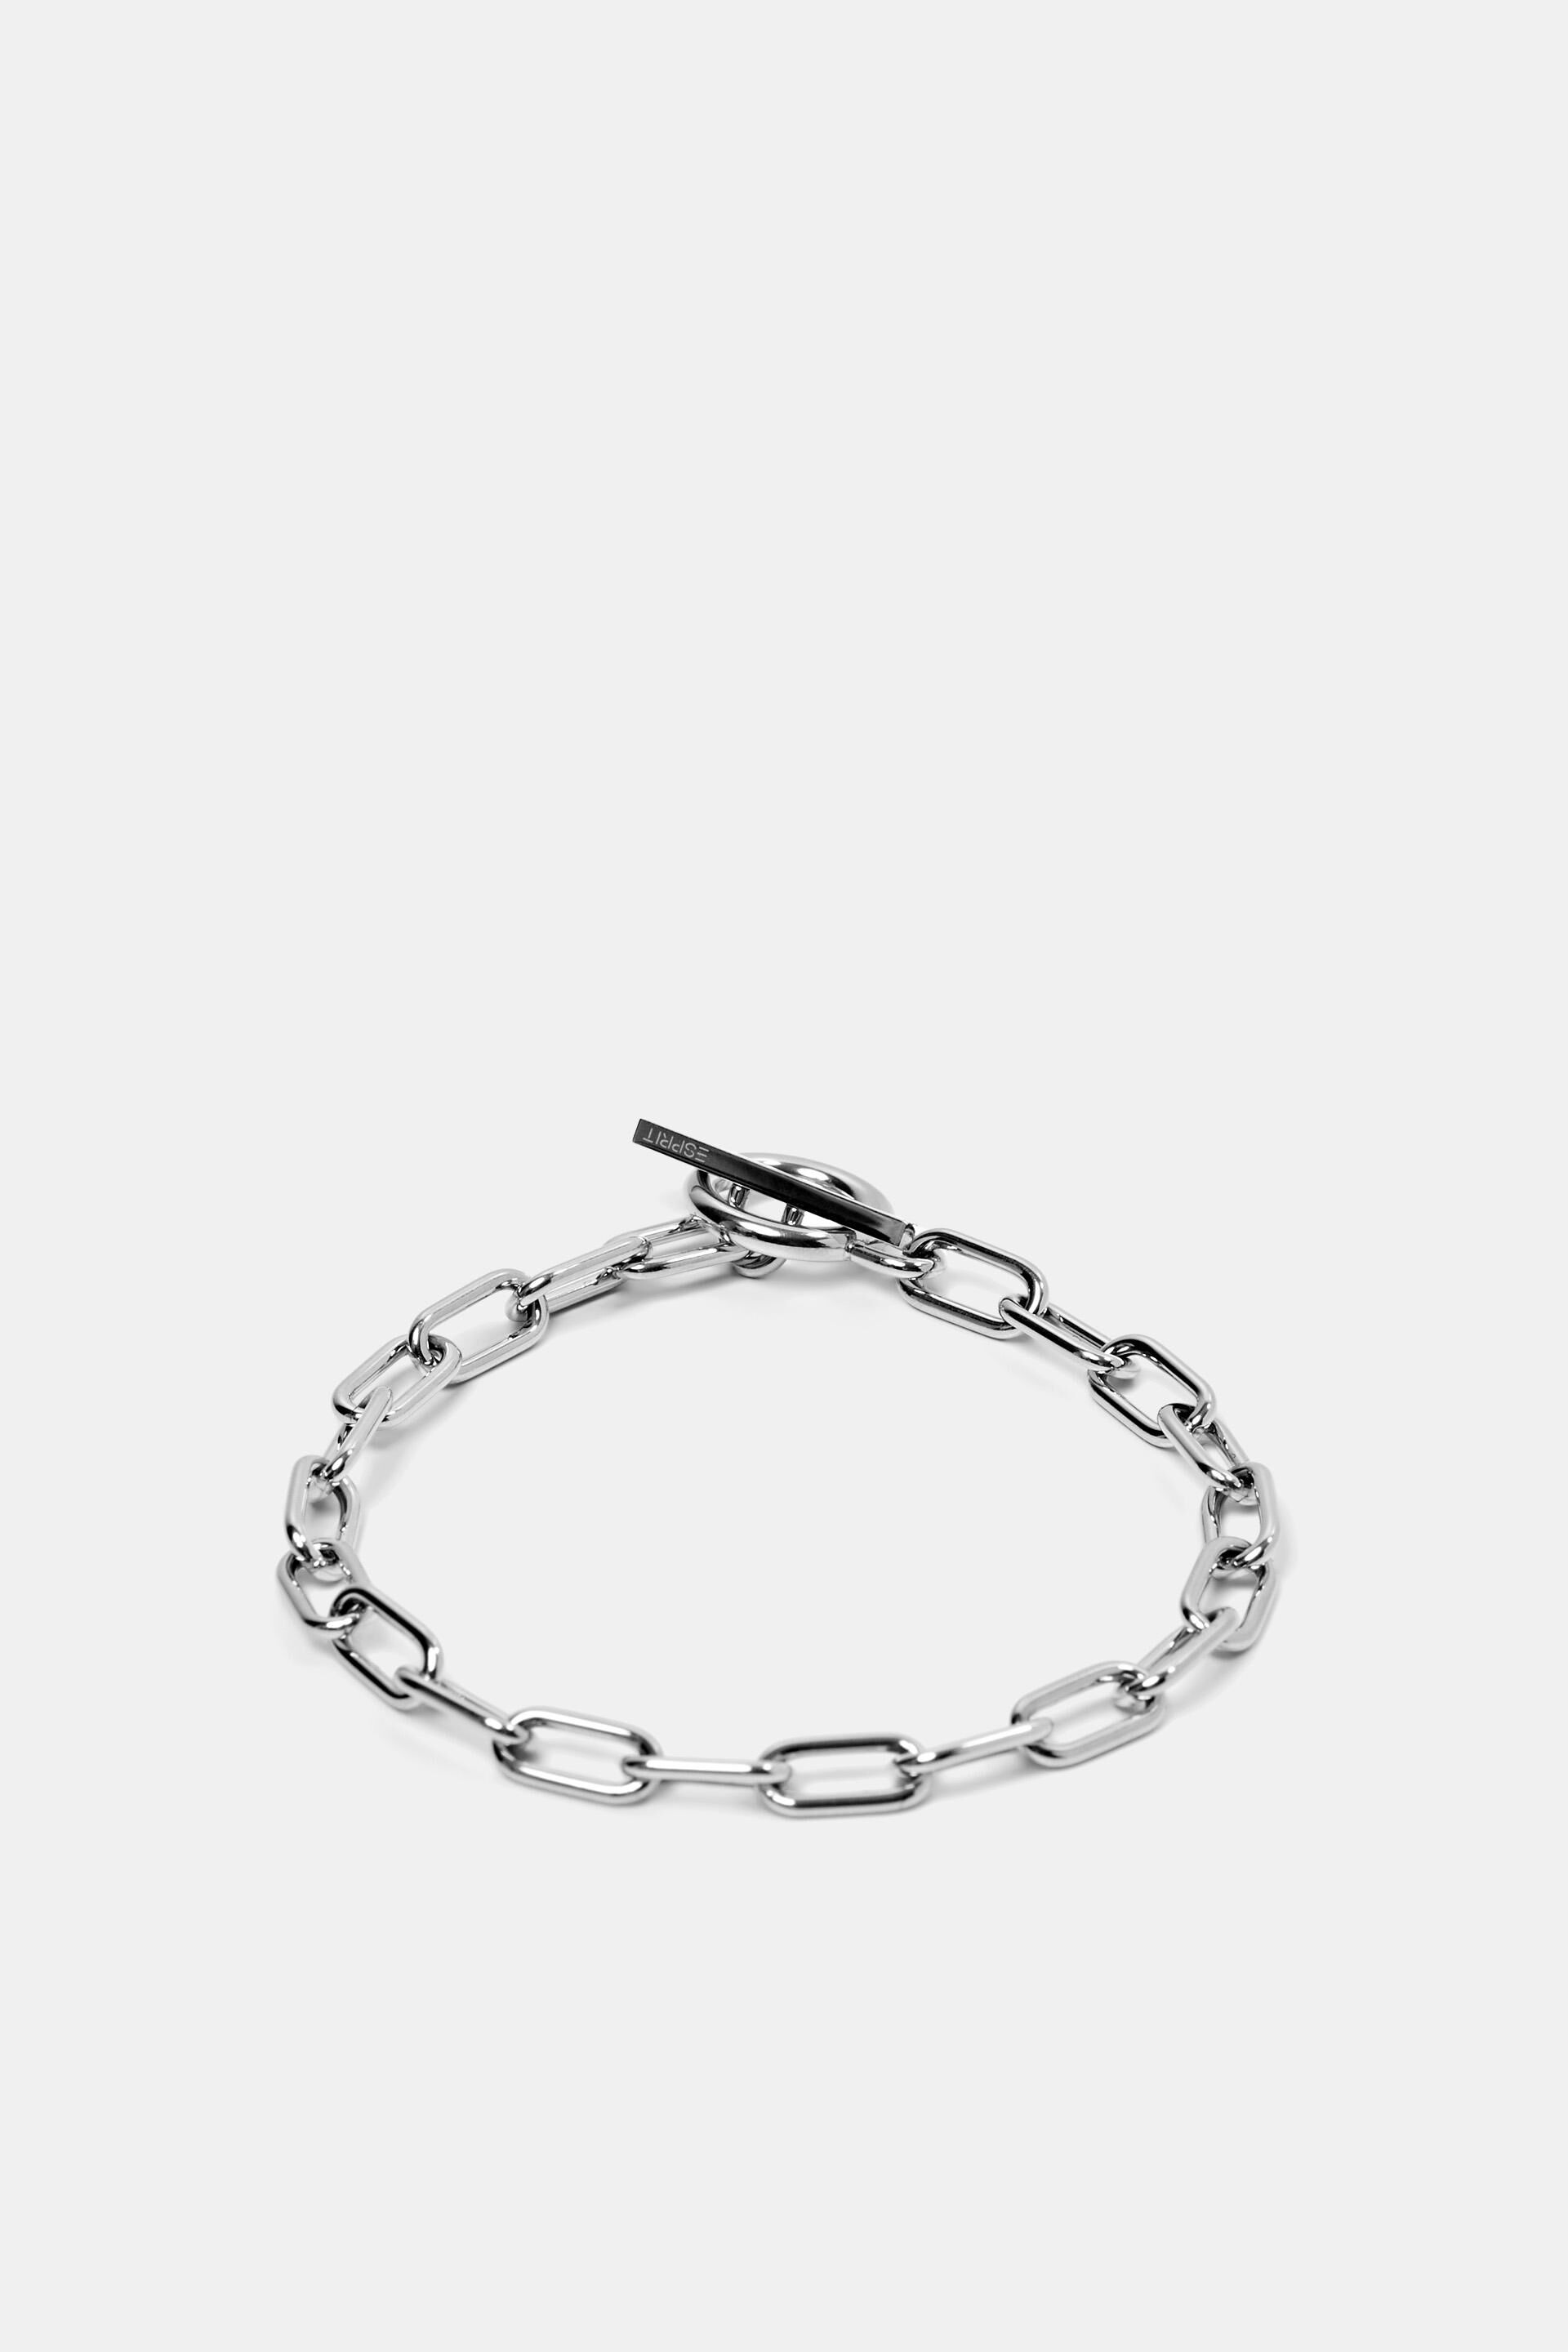 Esprit bracelet, steel Chain stainless